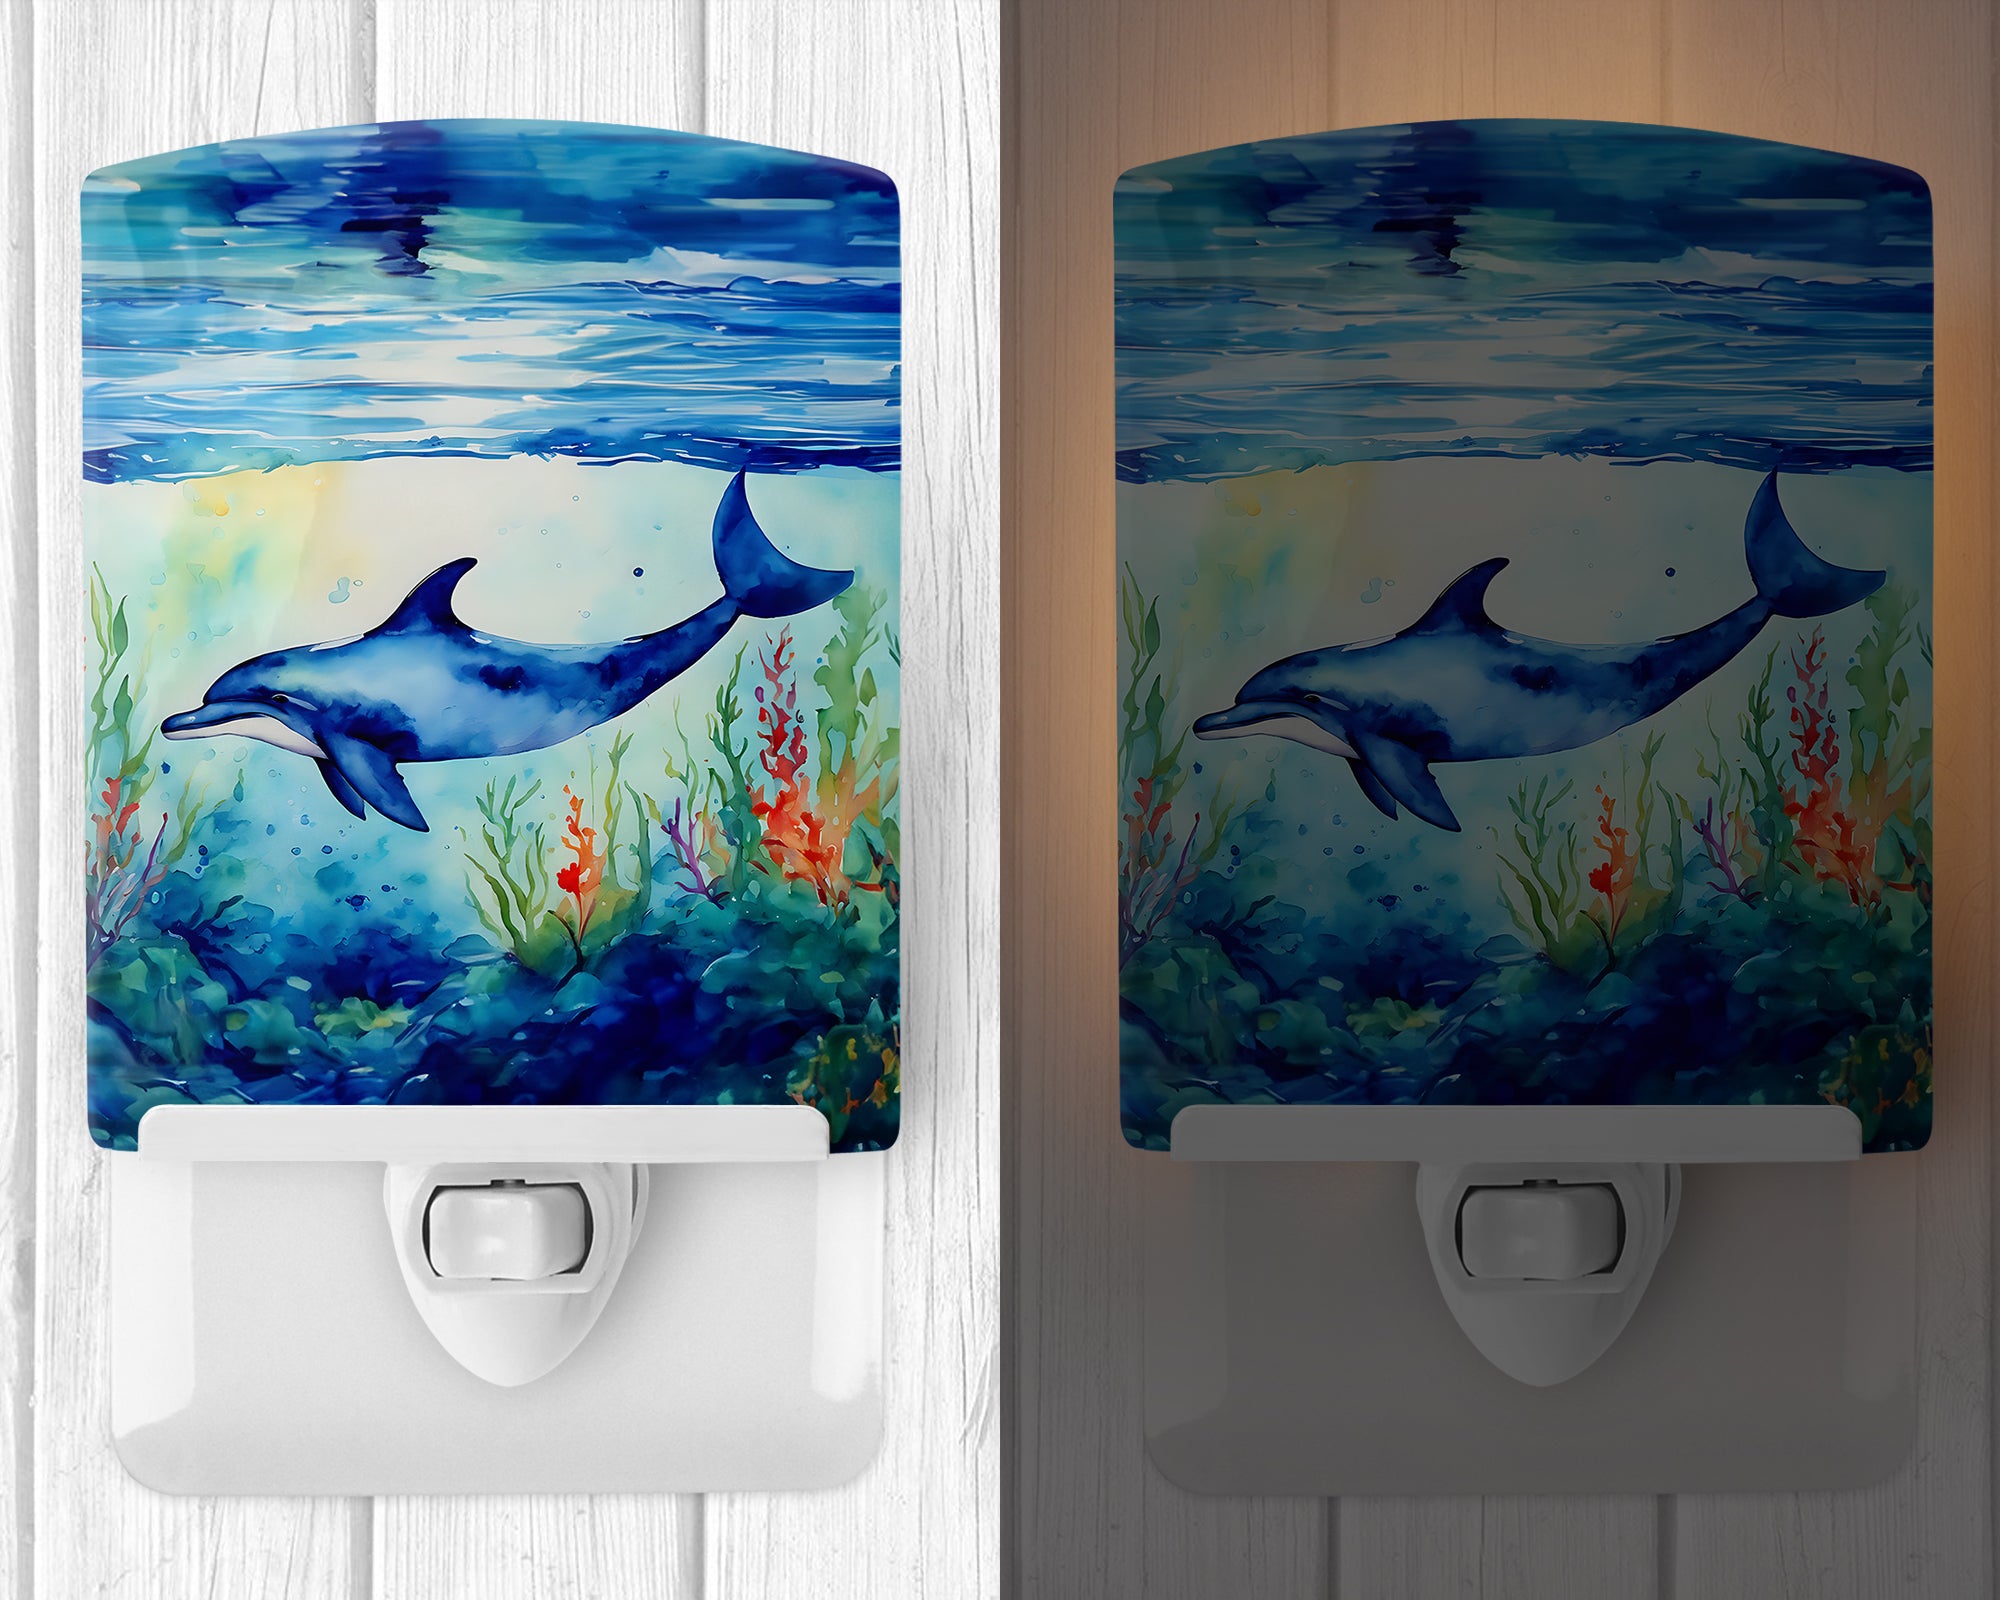 Buy this Dolphin Ceramic Night Light